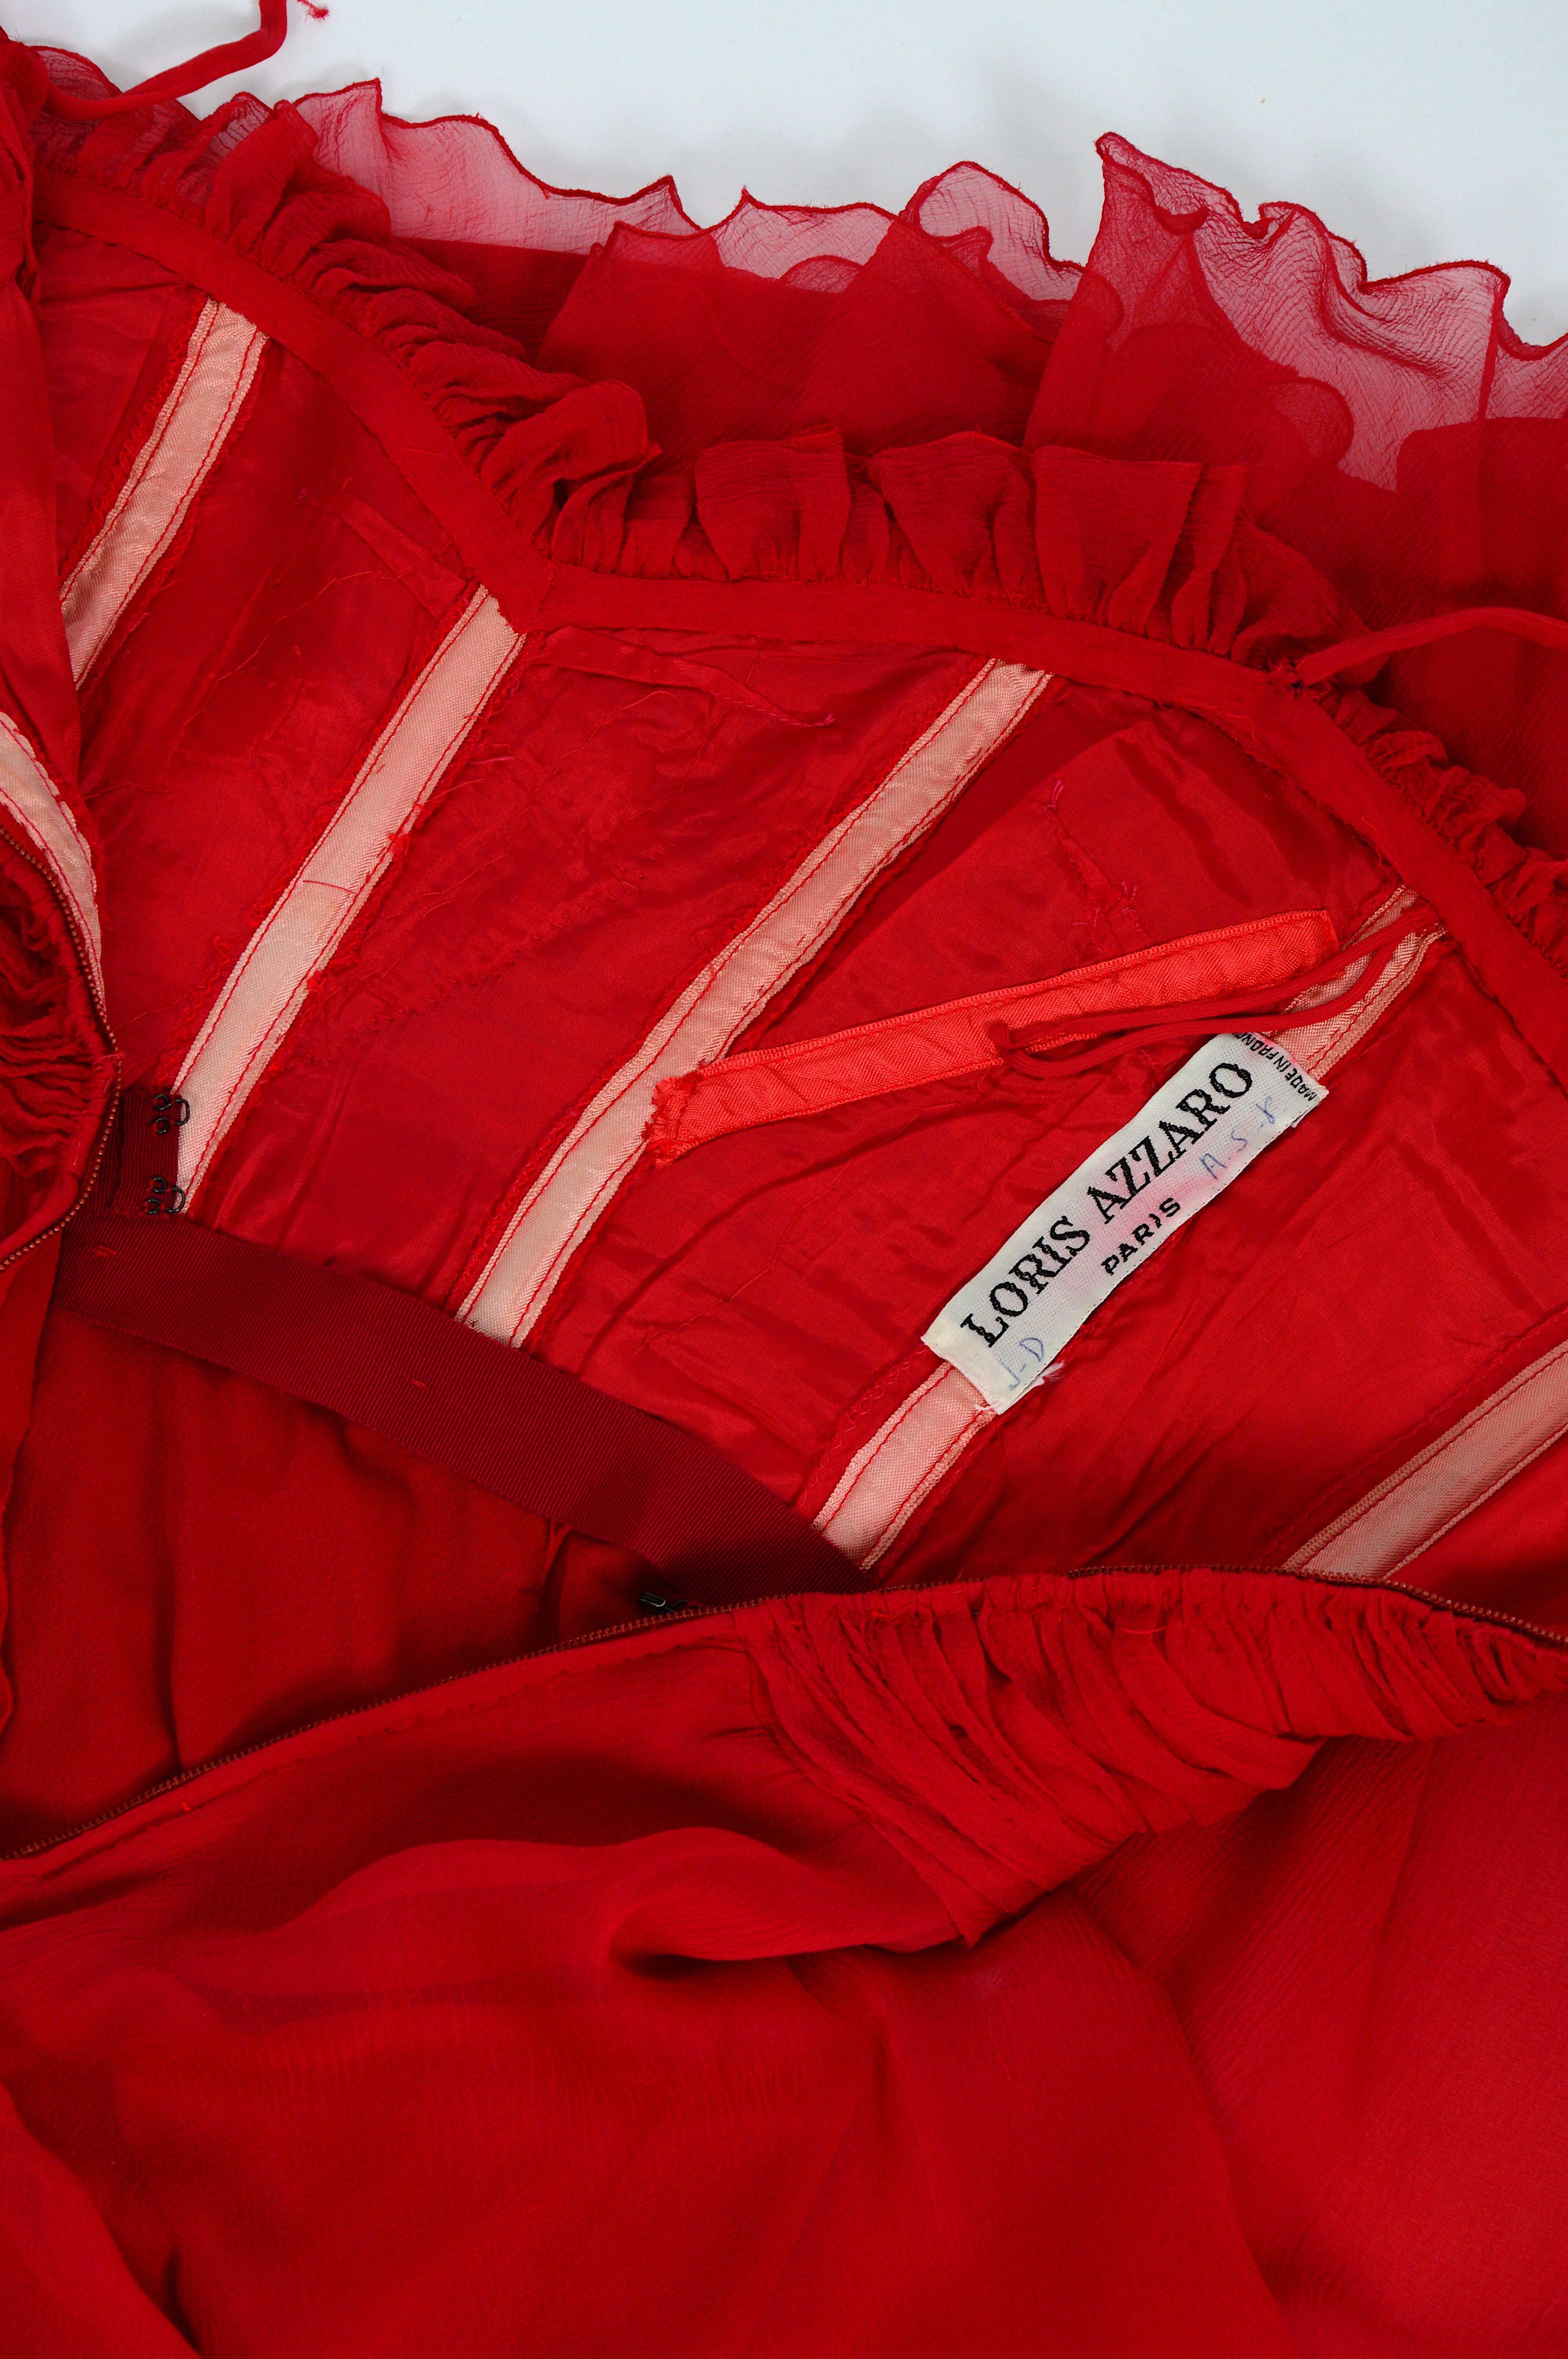 Loris Azzaro 1970s vintage collectors red silk chiffon draped bodice dress For Sale 2